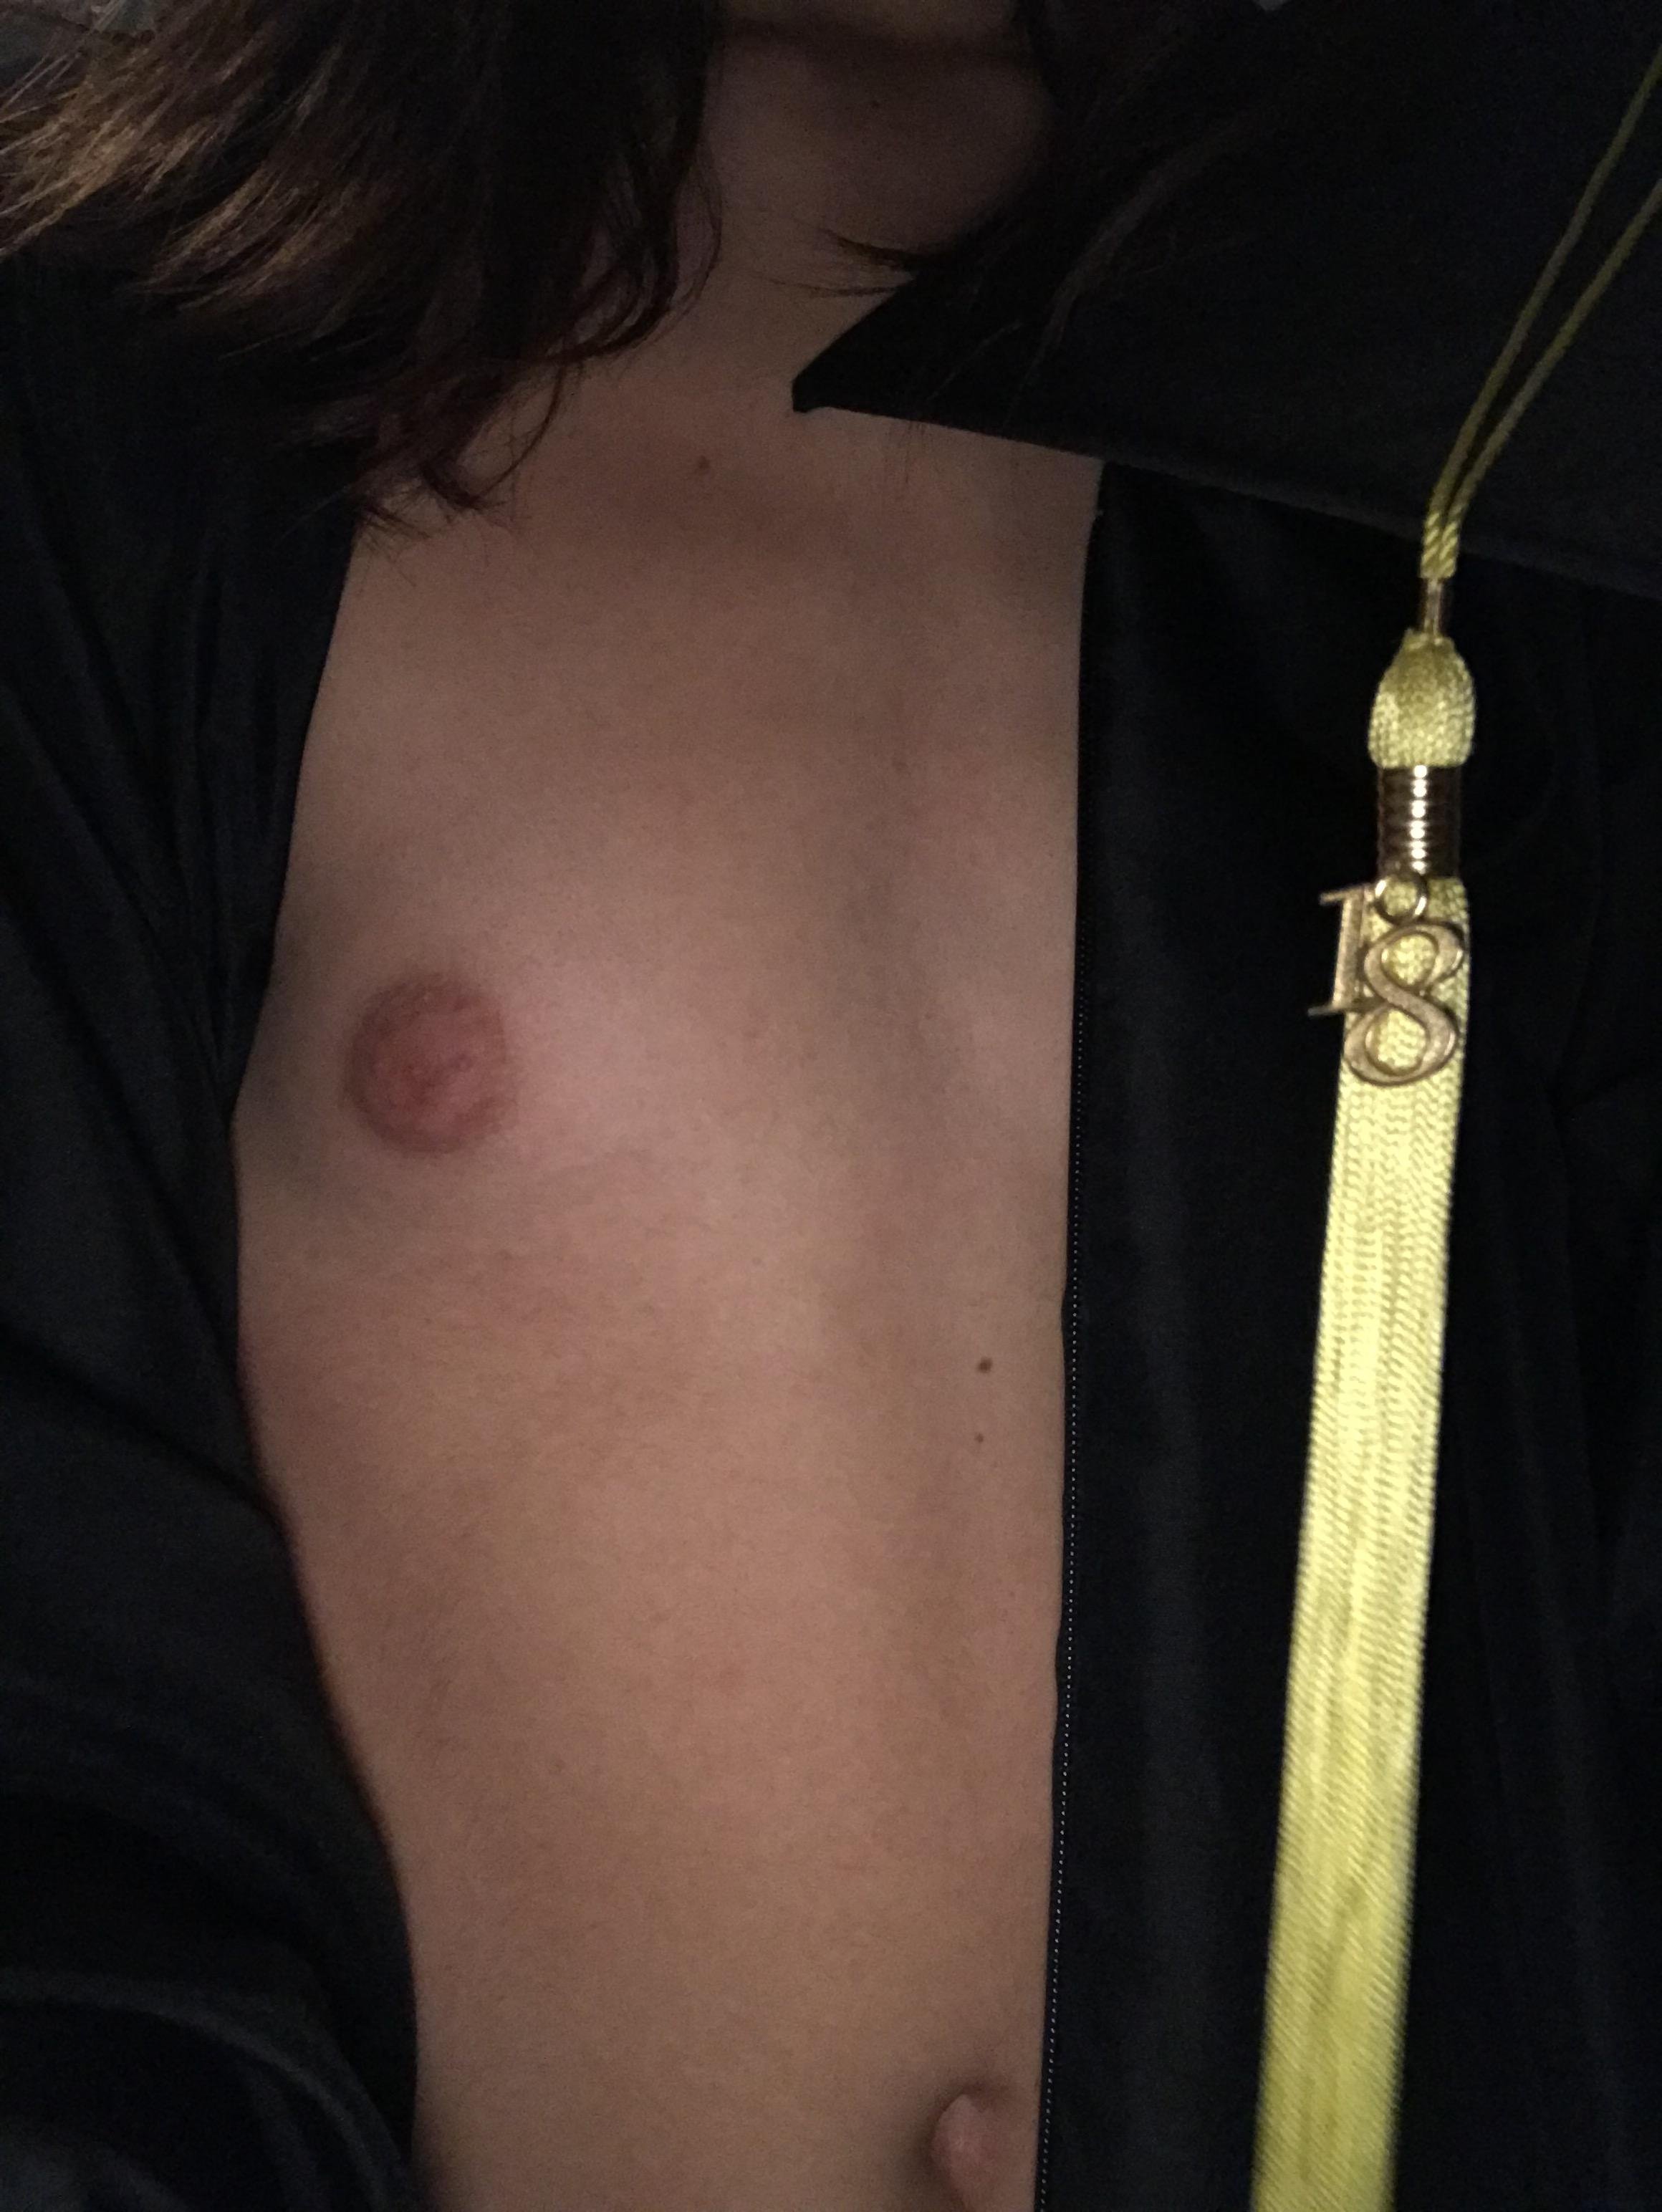 Wearing my graduation robe, thinking of you guys